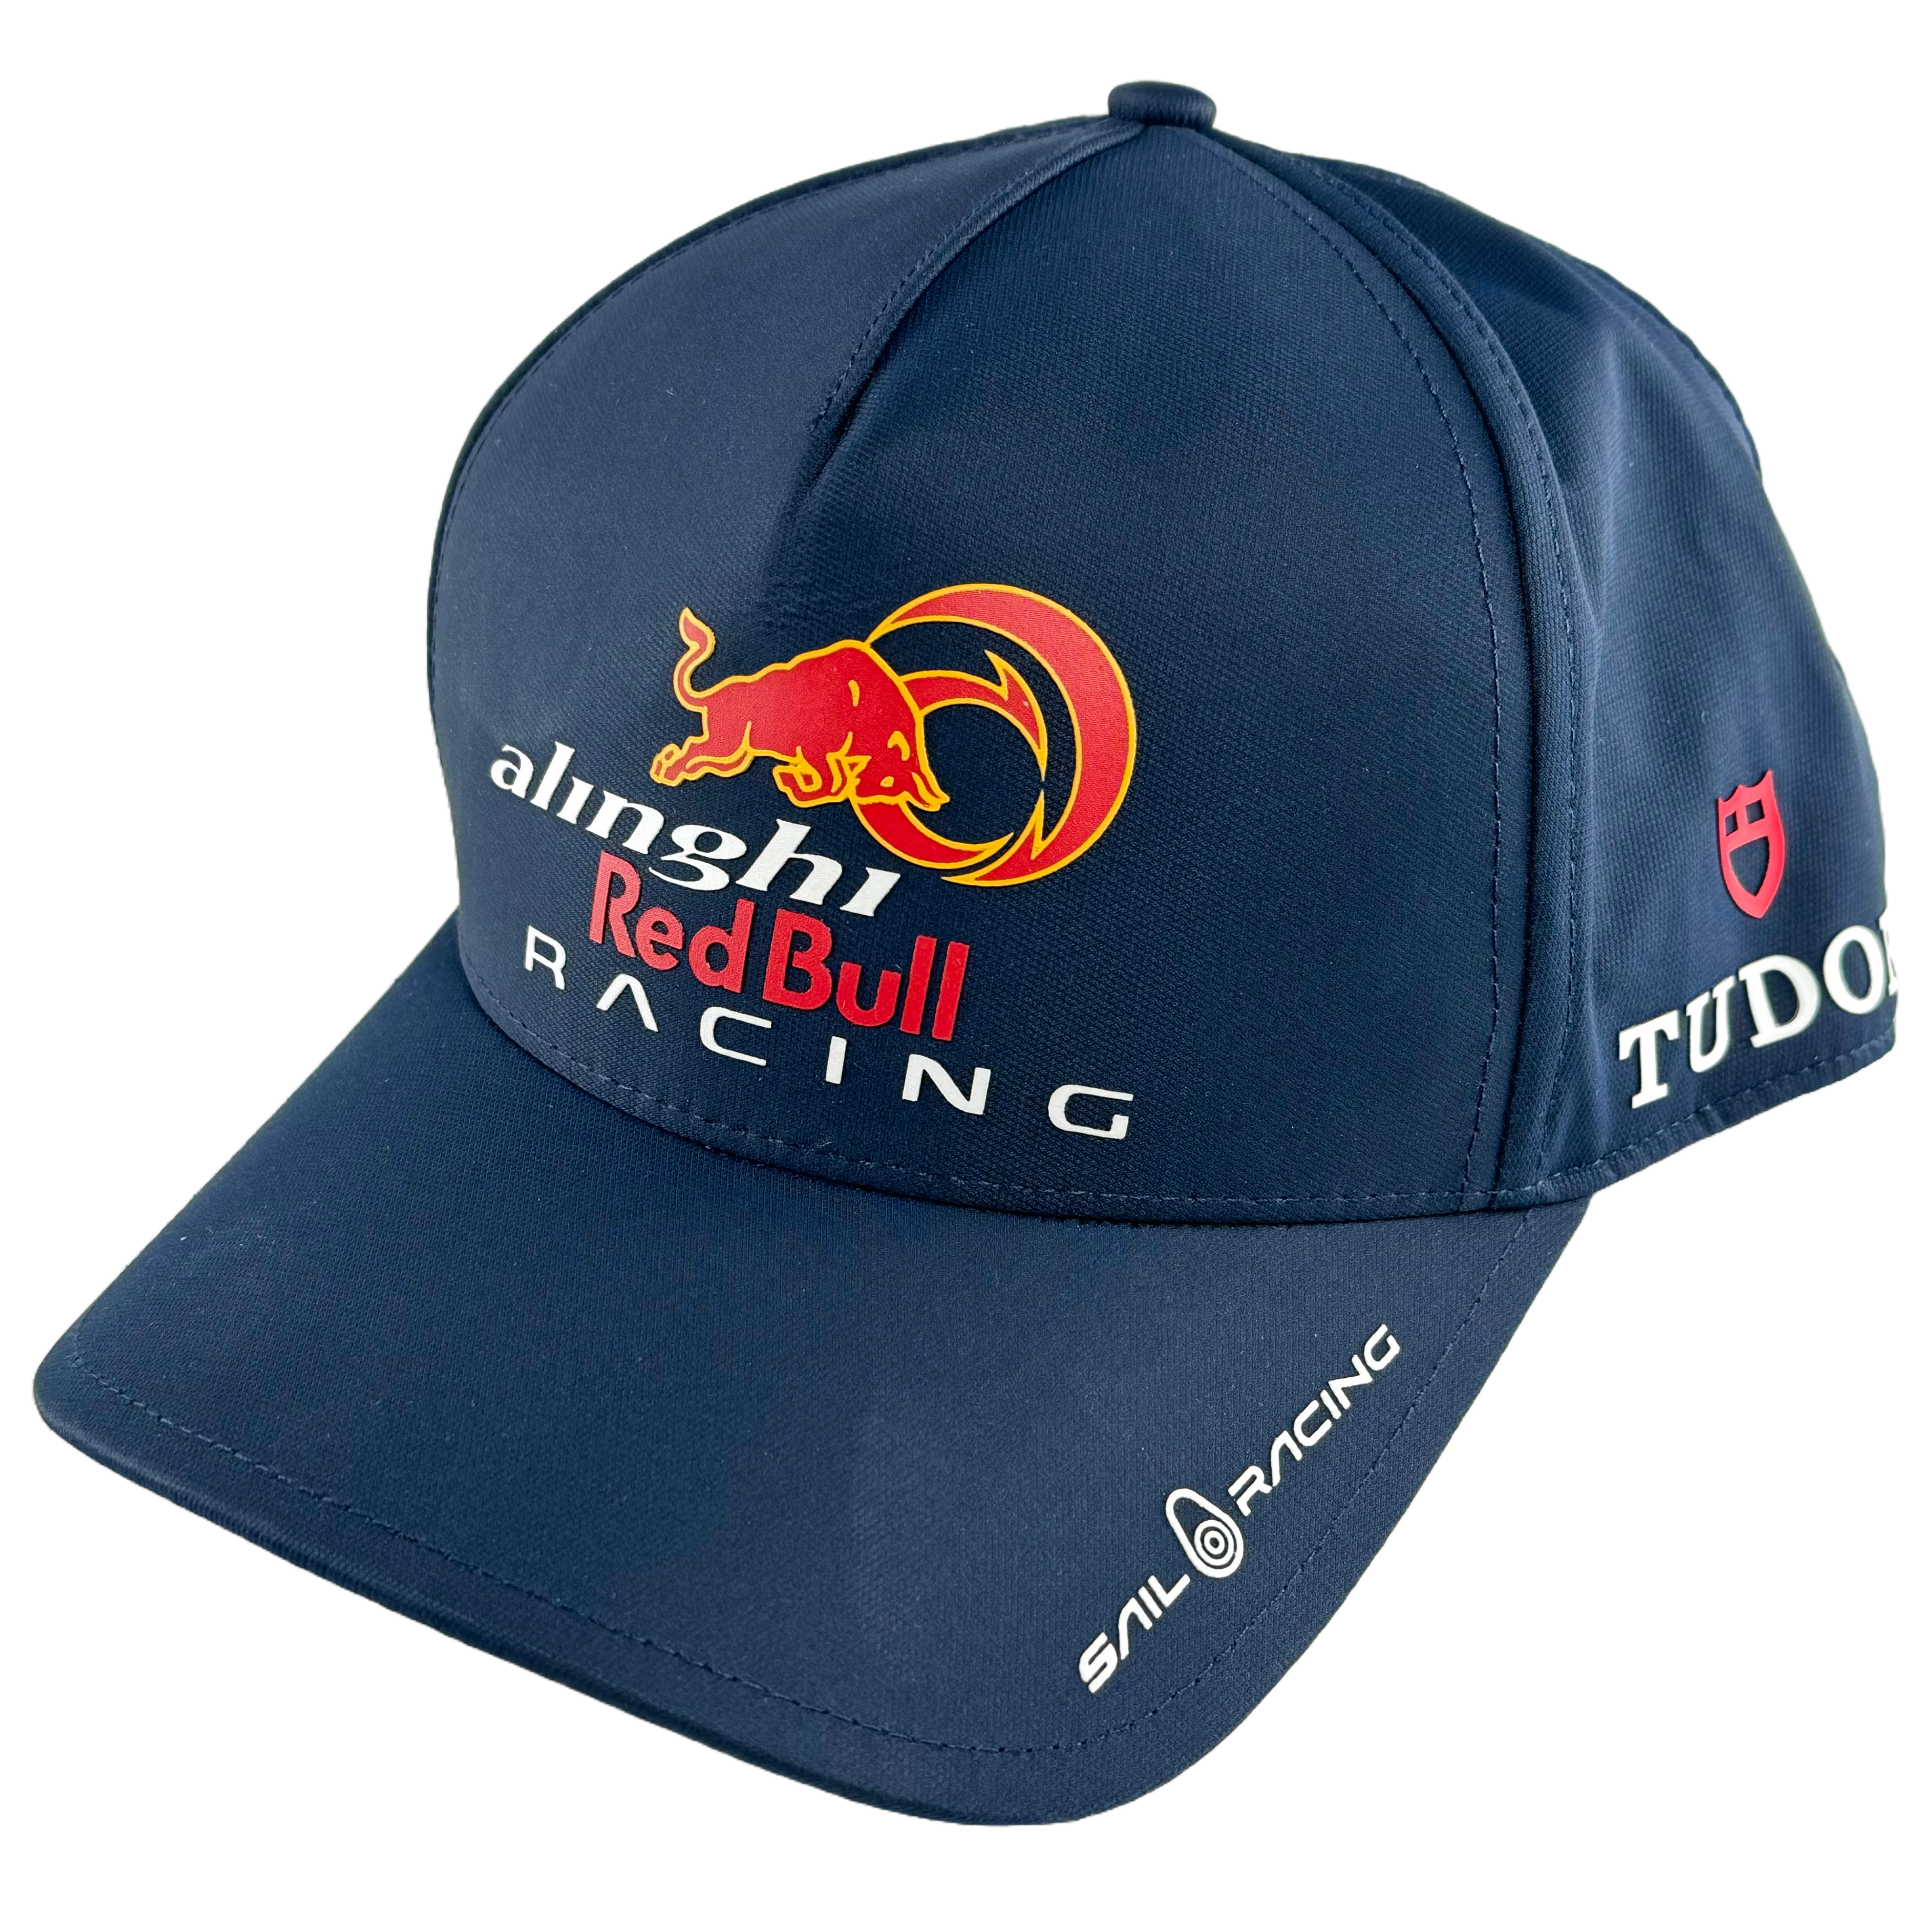 Red Bull Tudor Sail racing Cap Kappe Mütze Hat Baseballhat Hut Blau Blue